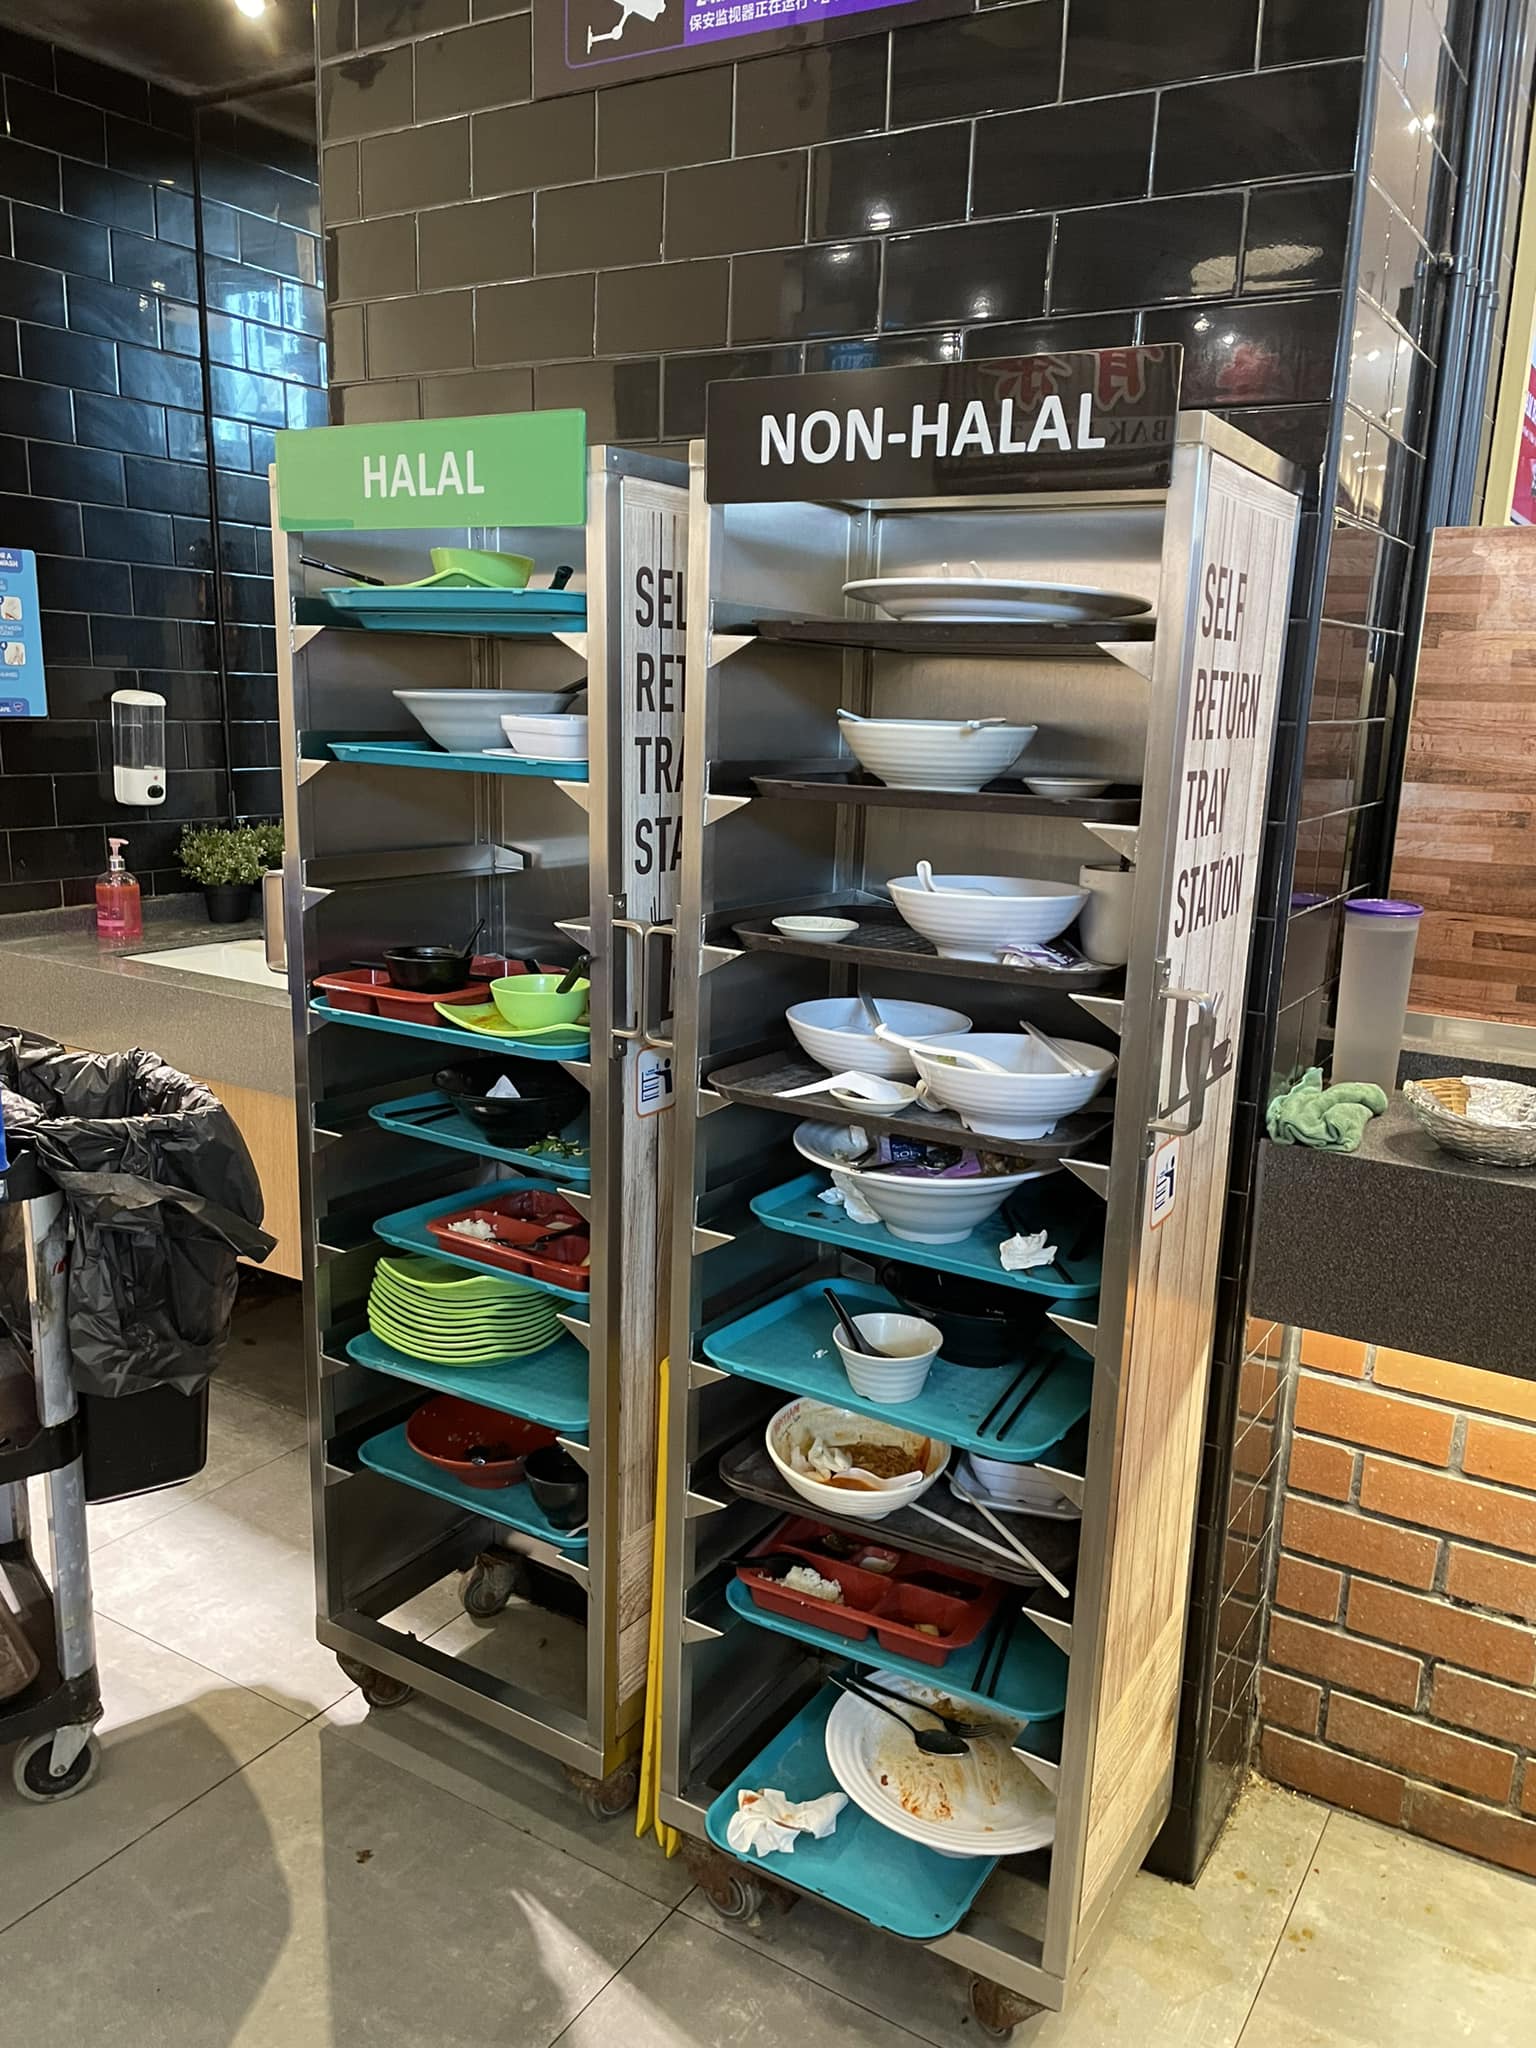 halal non halal tray